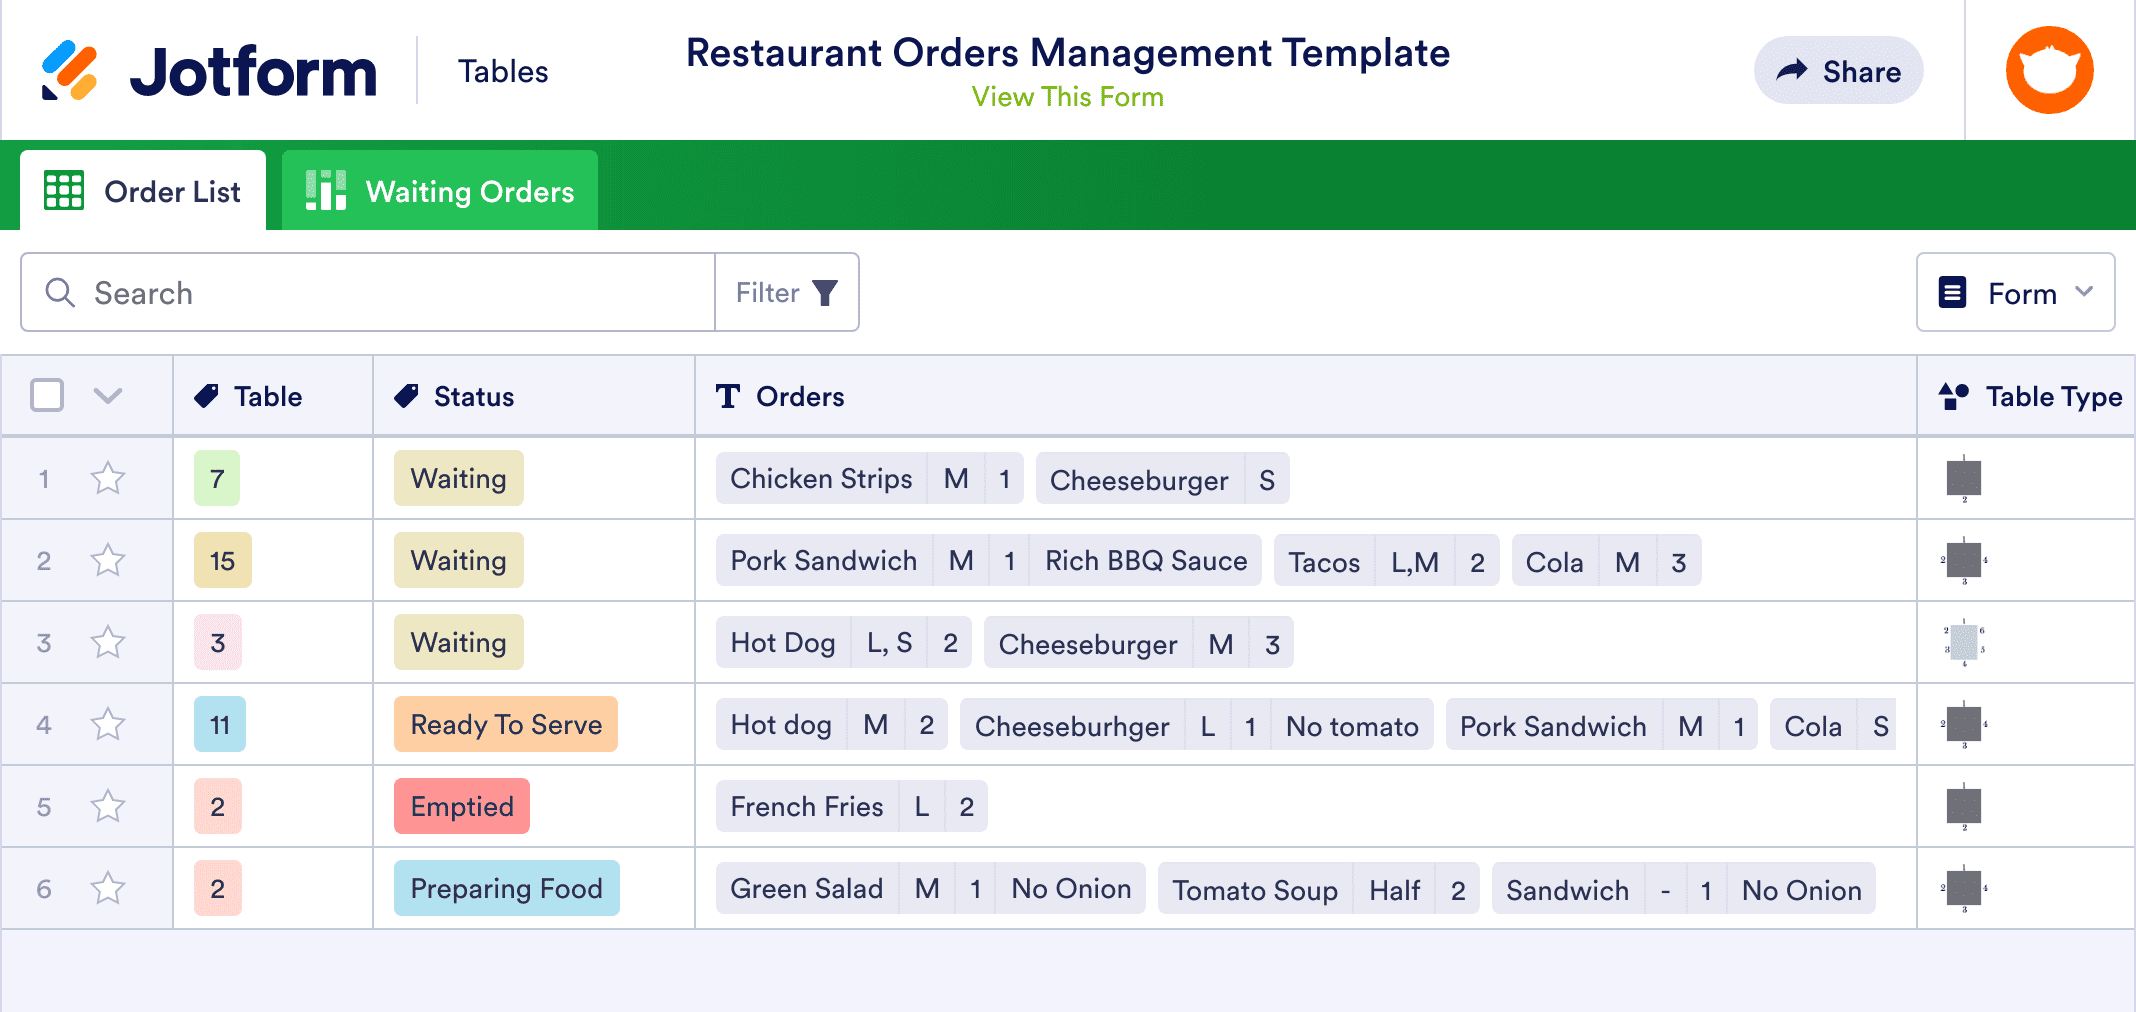 Restaurant Orders Management Template